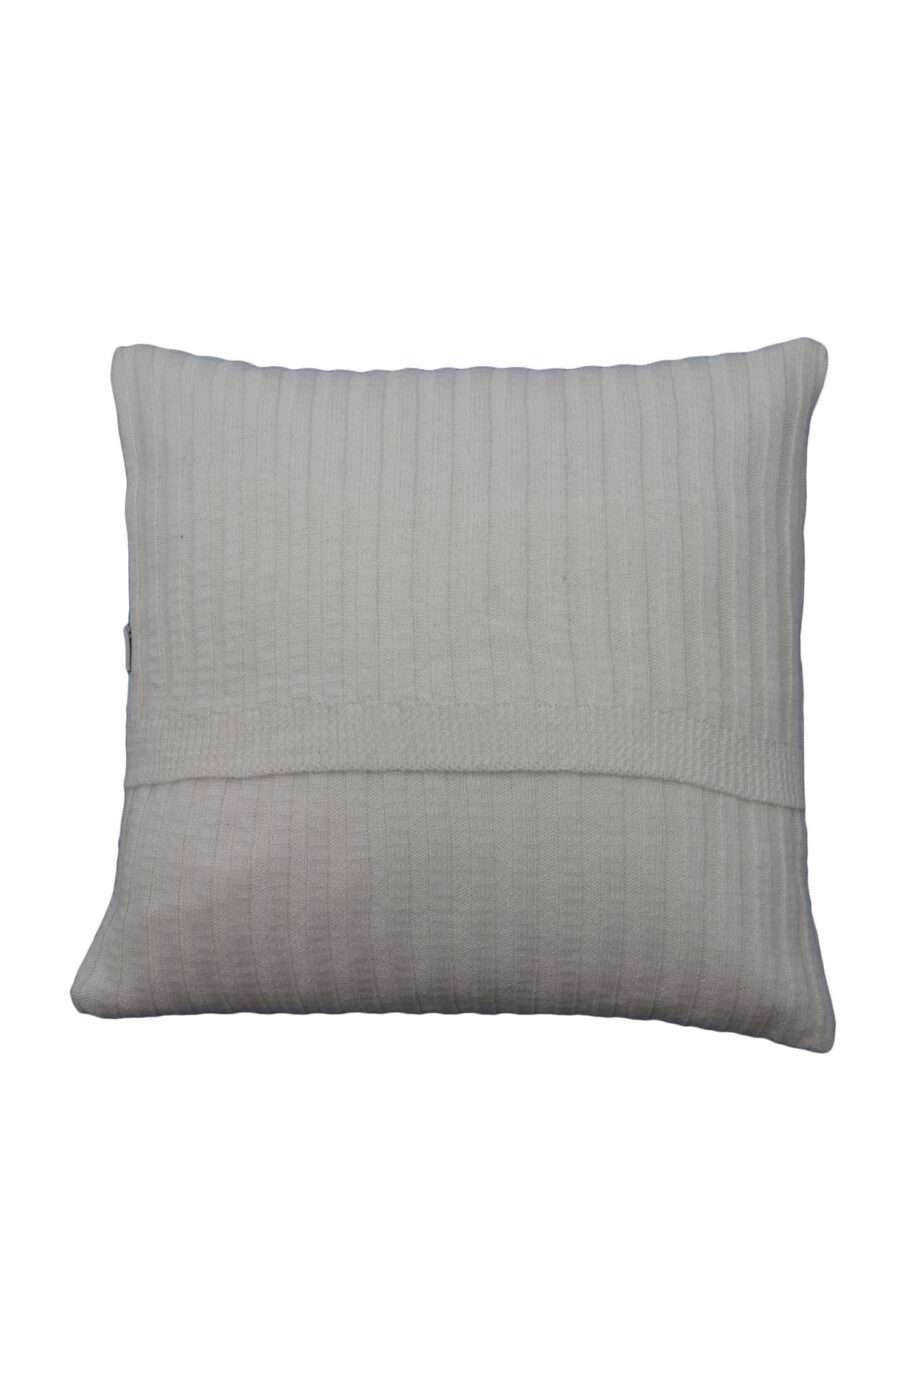 ribs small white knitted cotton pillowcase medium